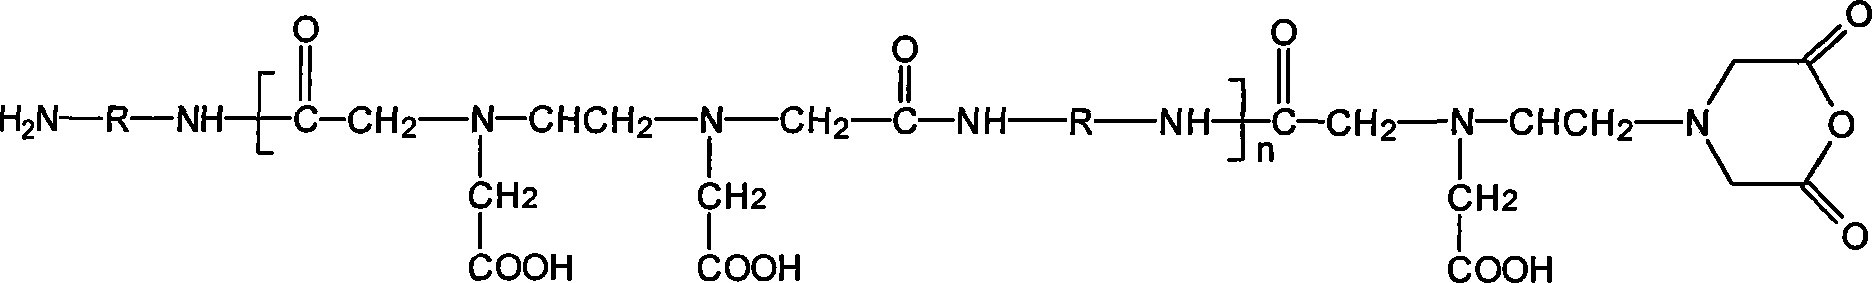 Hydrogel materials based on ethylenediaminetetraacetic dianhydride